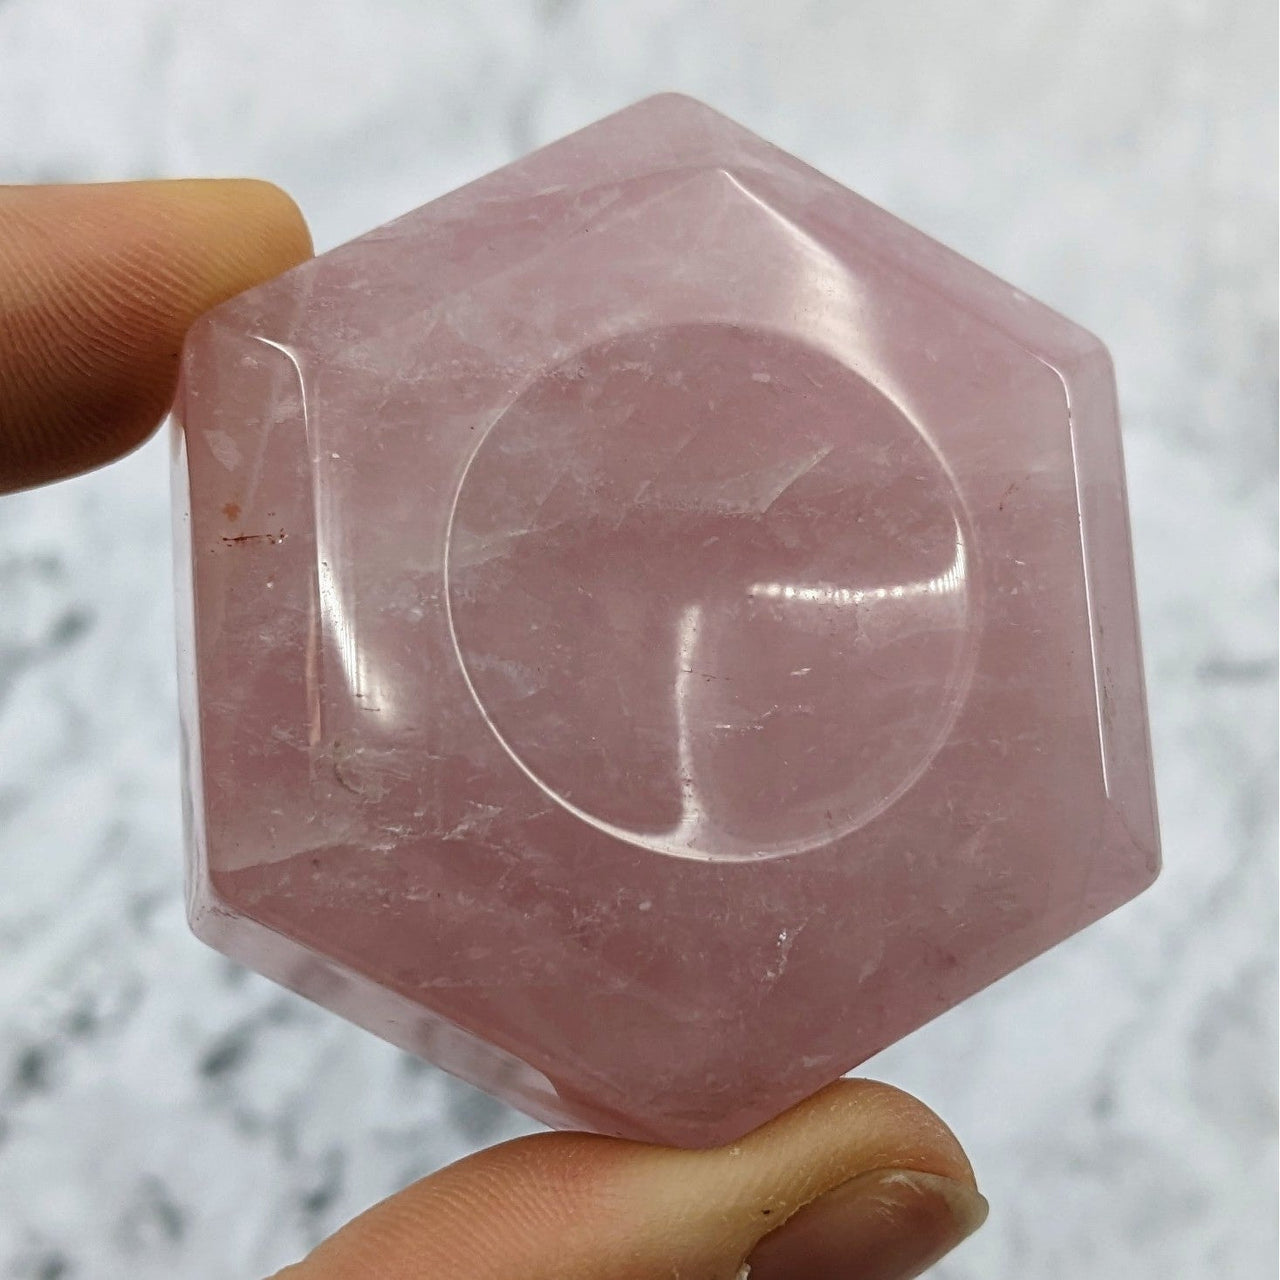 Rose Quartz Sphere Holder LV2319 - 1.5-2.1’ pink quartz hexate on a white background